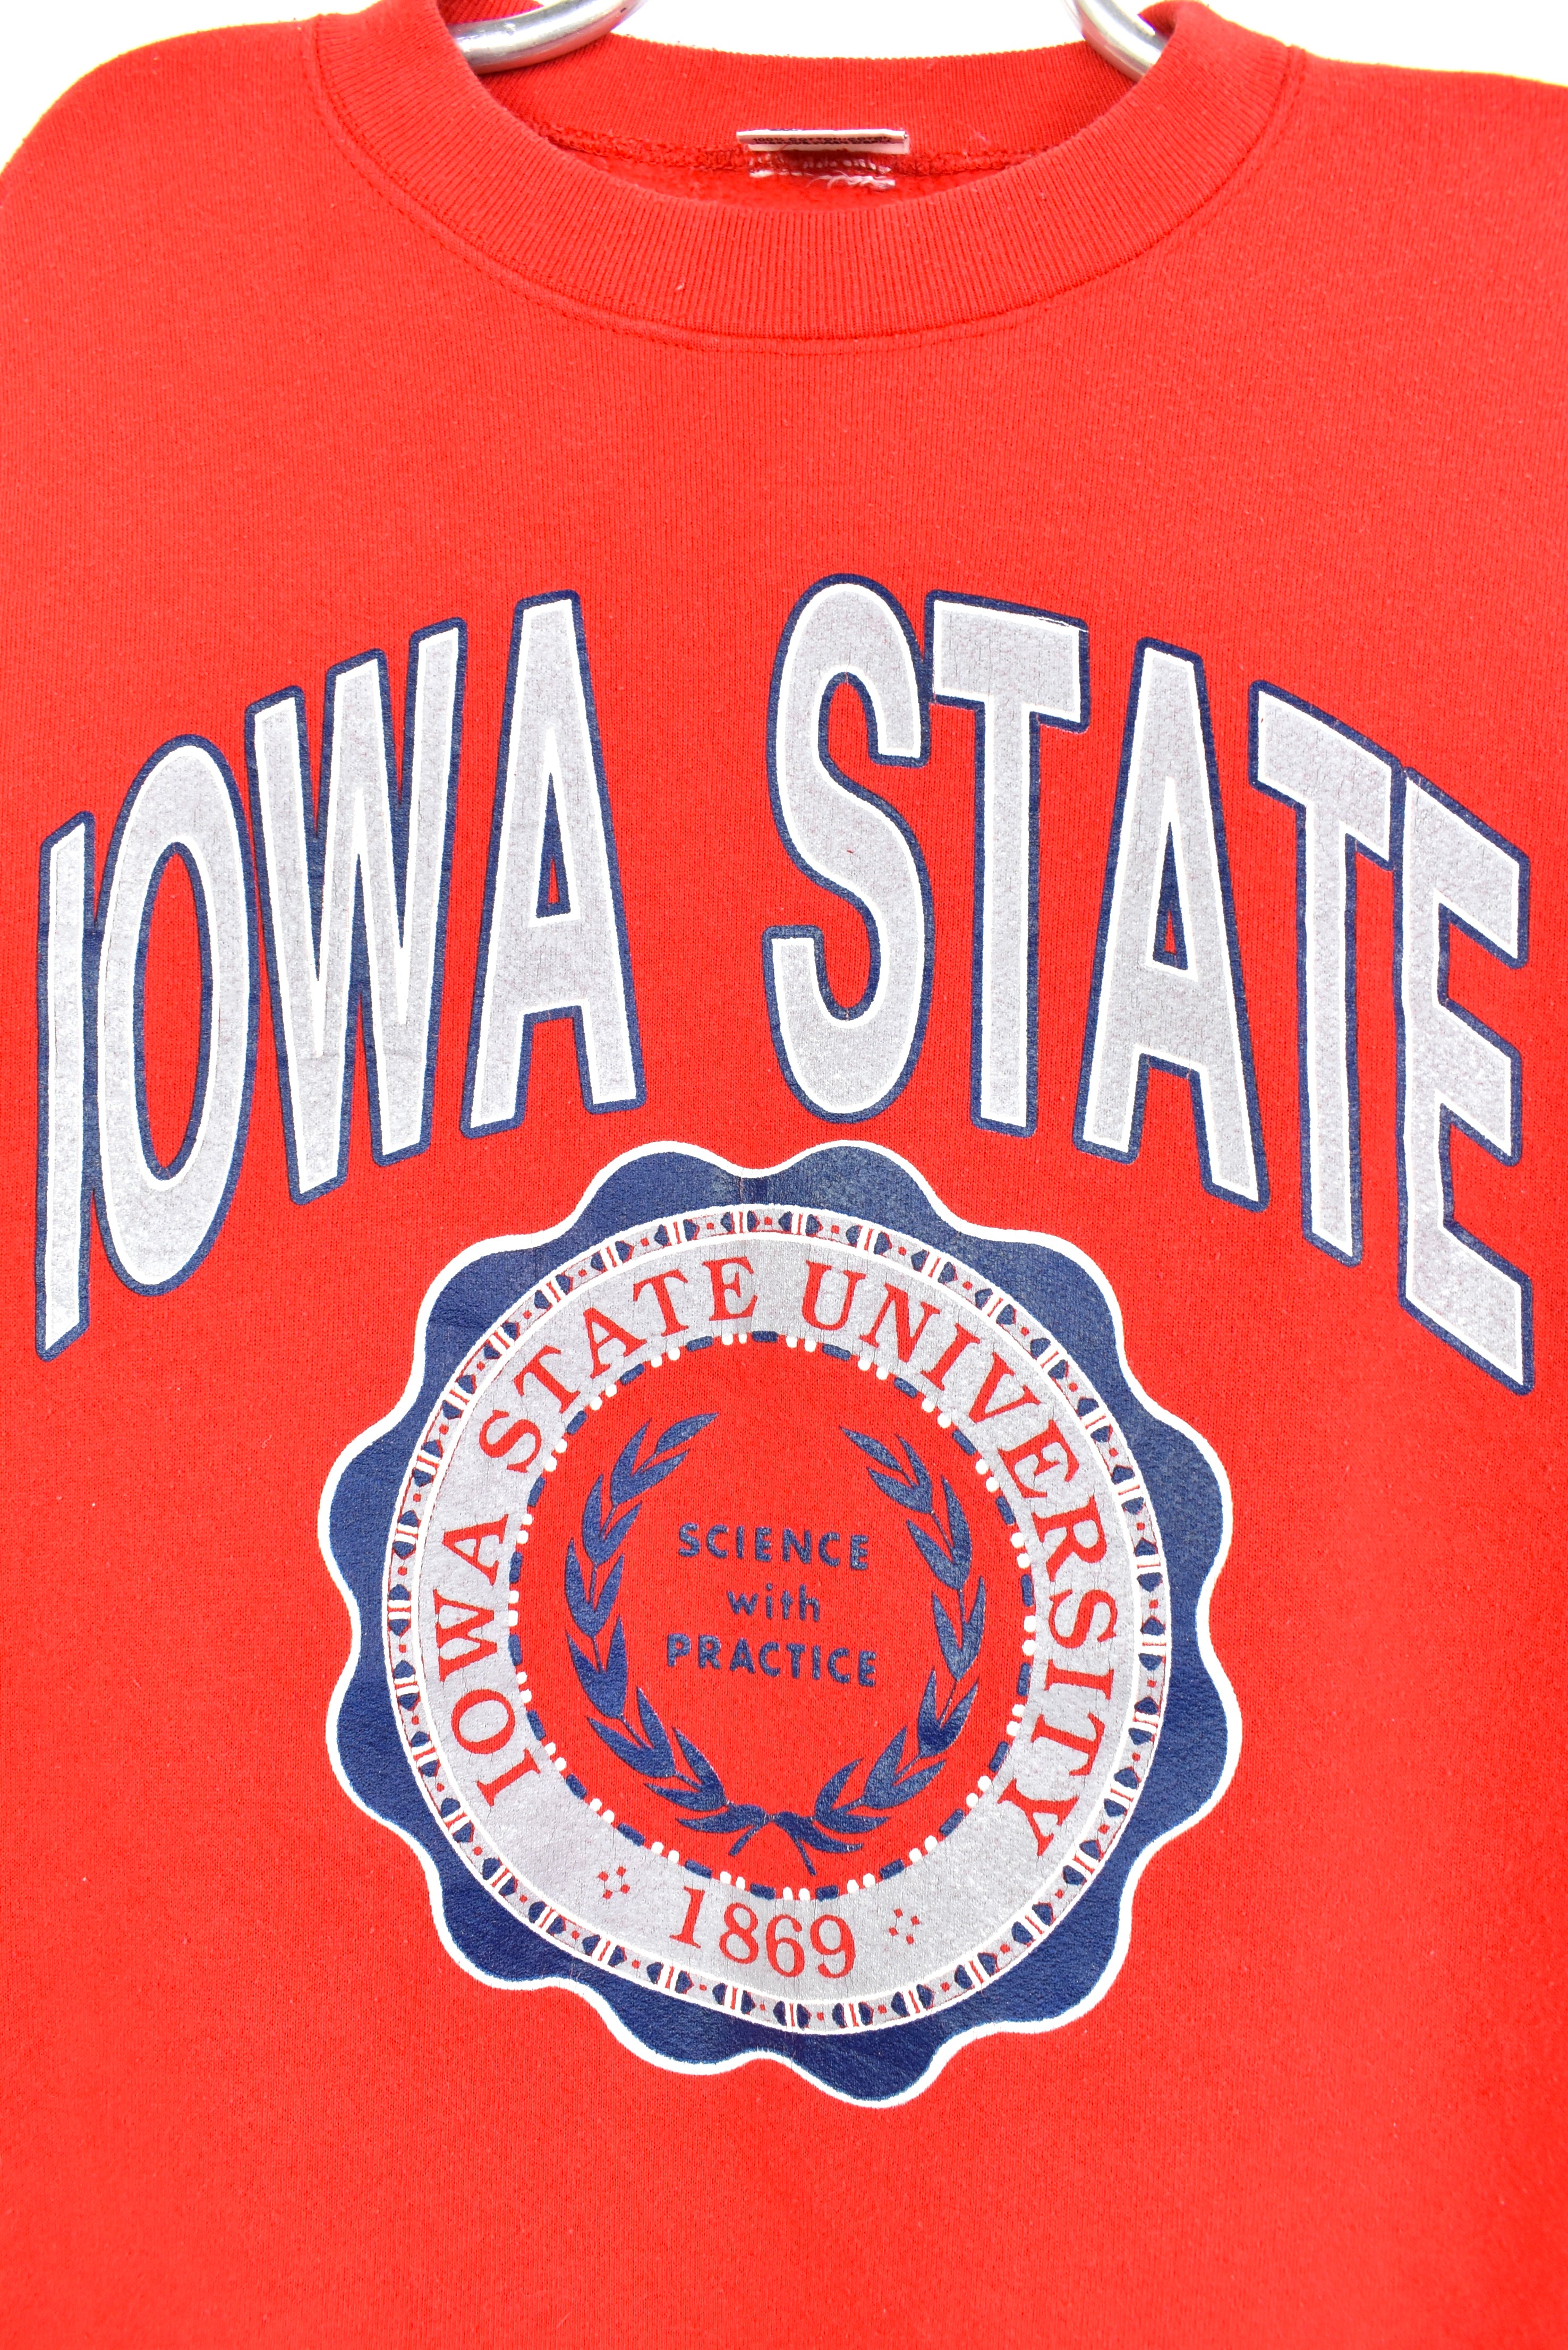 Vintage Iowa State University red sweatshirt | Large COLLEGE